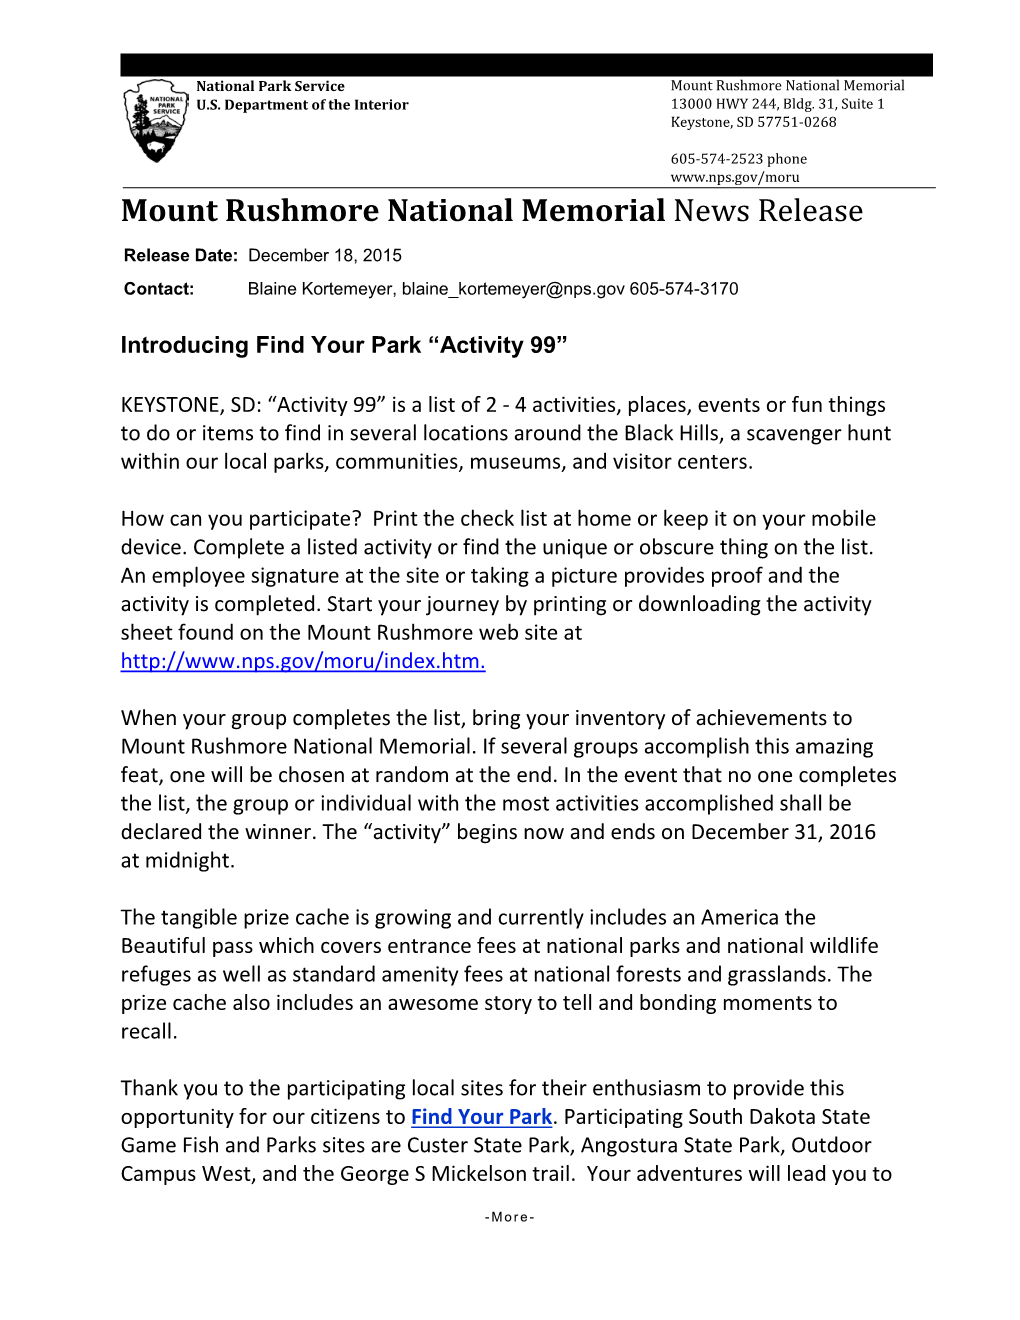 Mount Rushmore National Memorial News Release